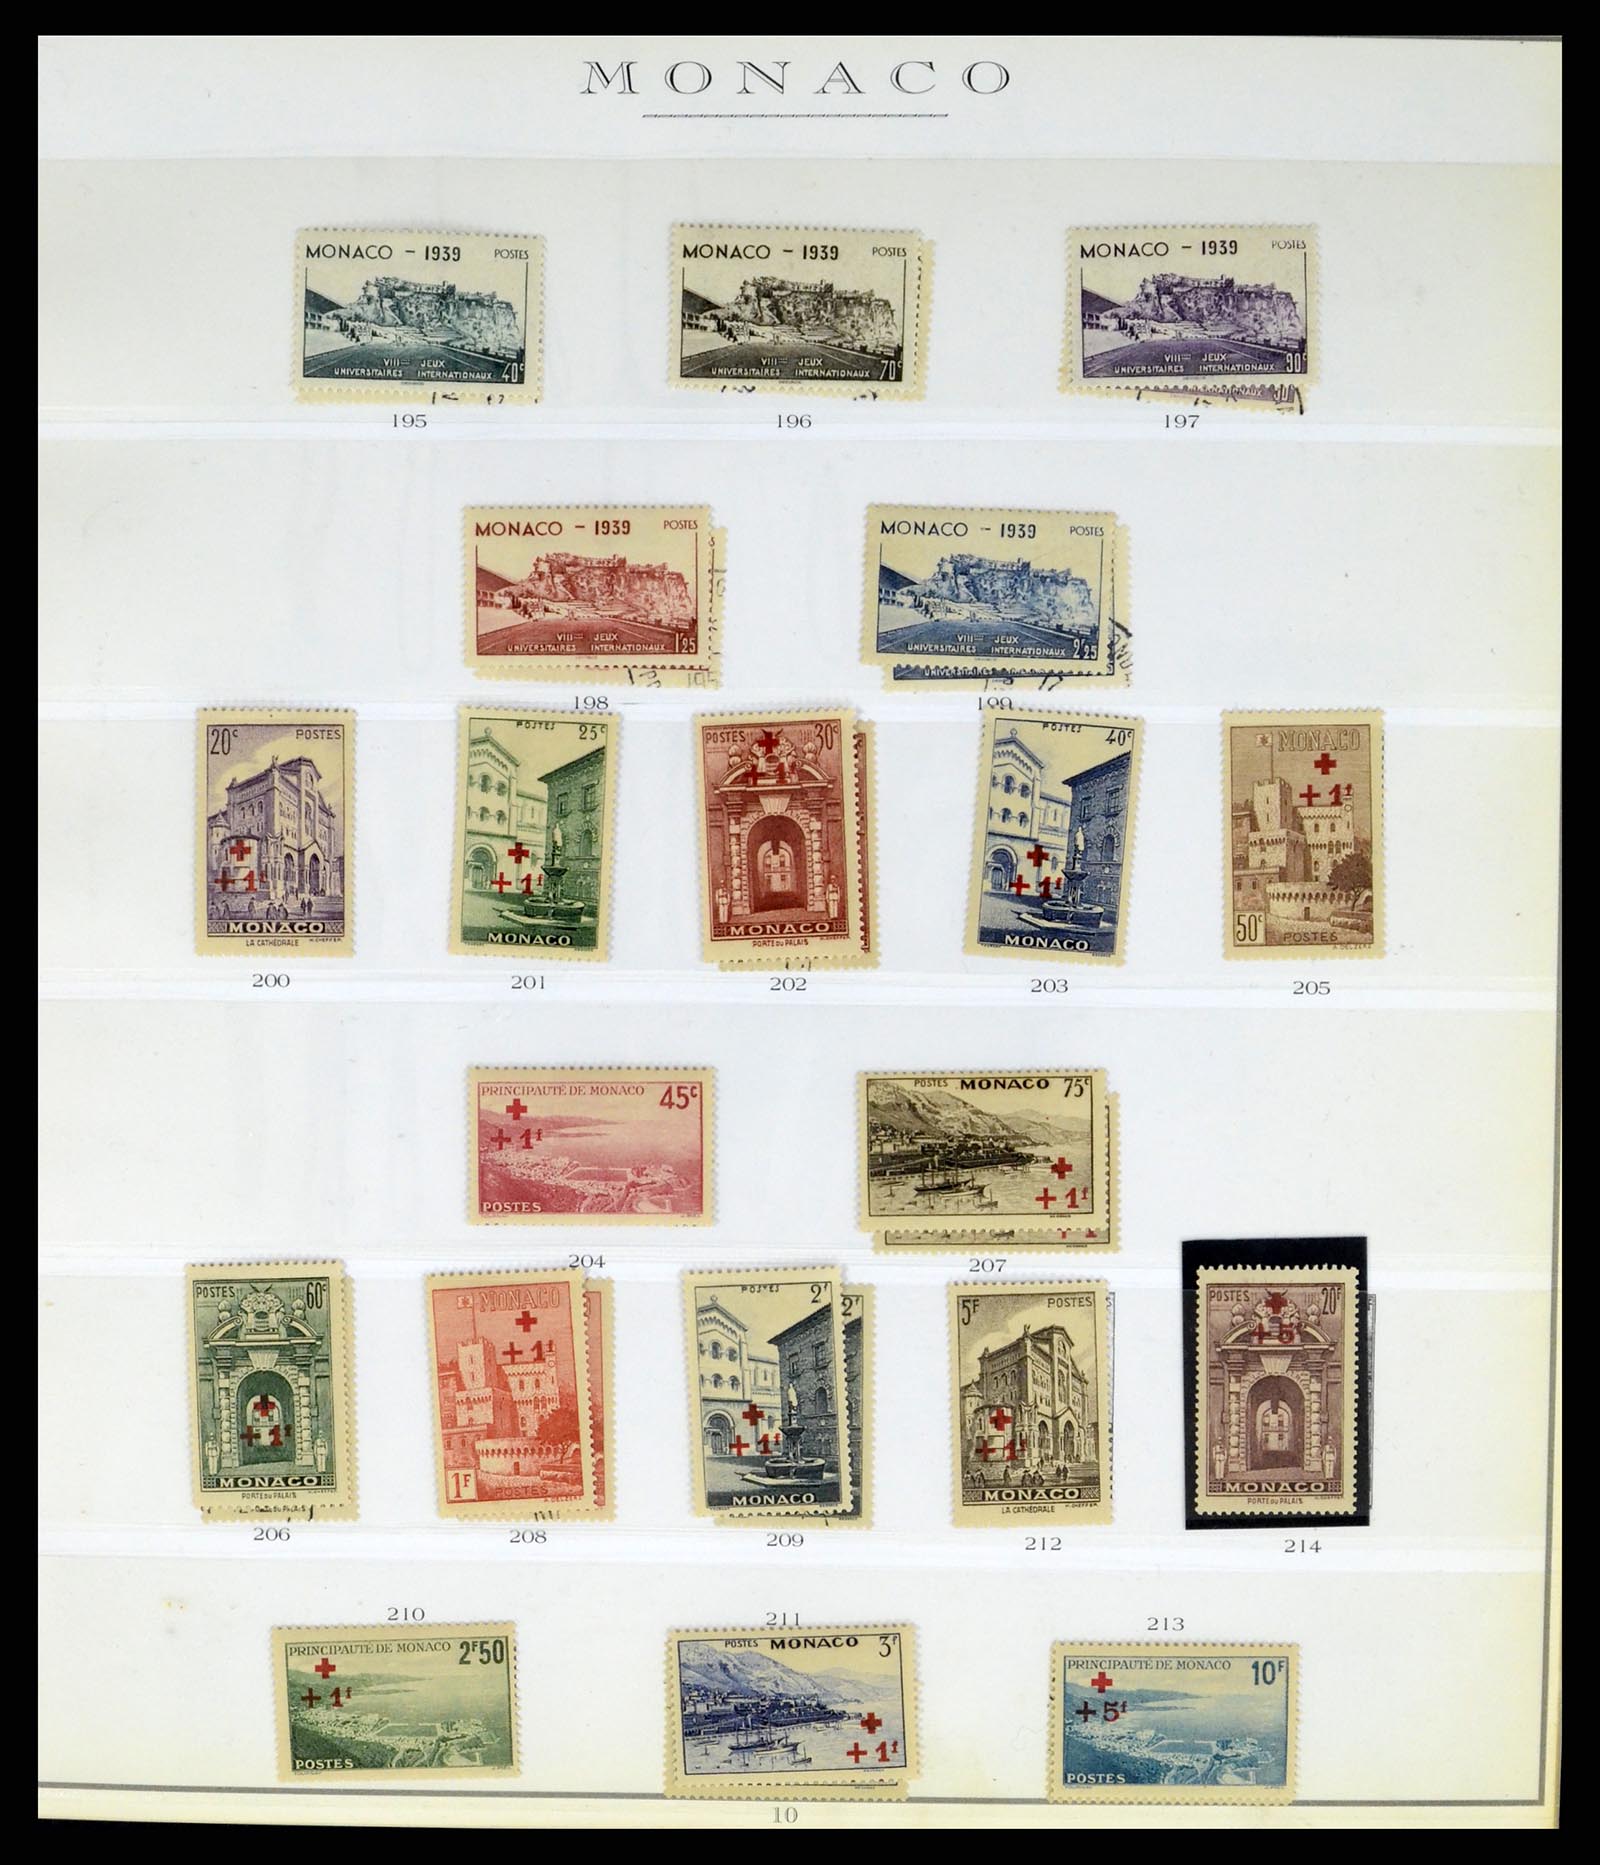 37437 018 - Stamp collection 37437 Monaco 1885-1996.